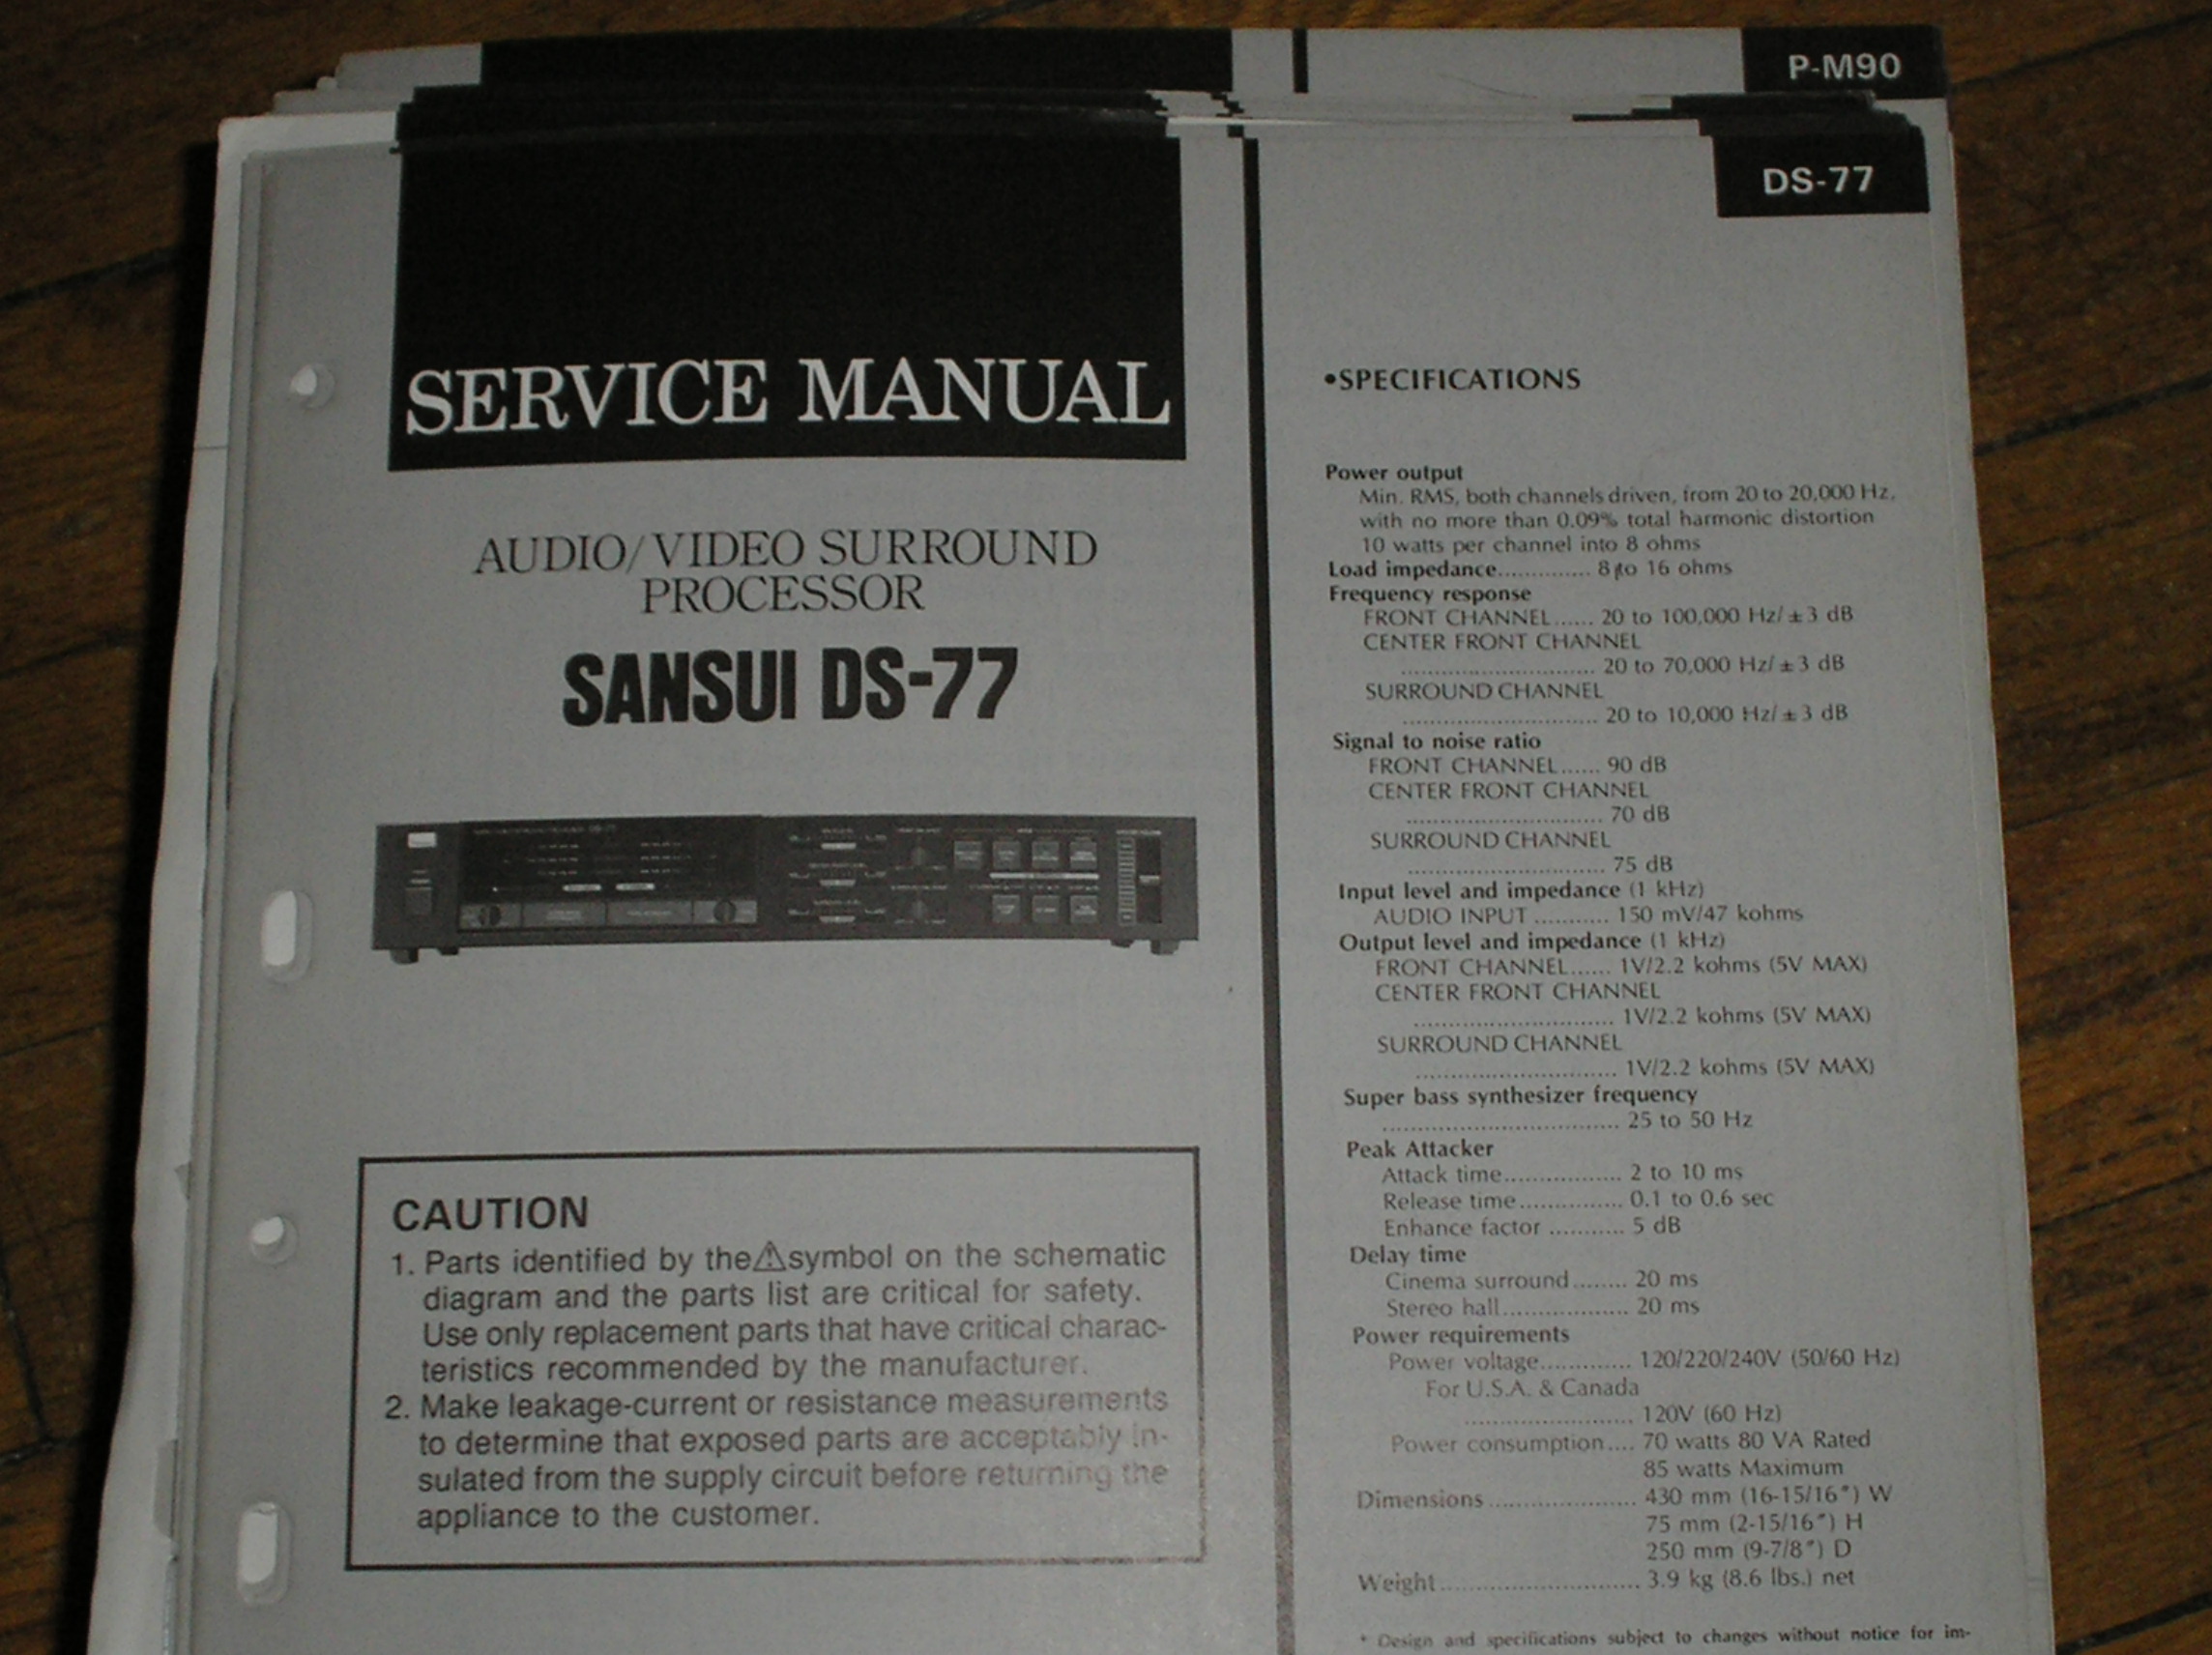 DS-77 Audio Video Surround Processor Service Manual